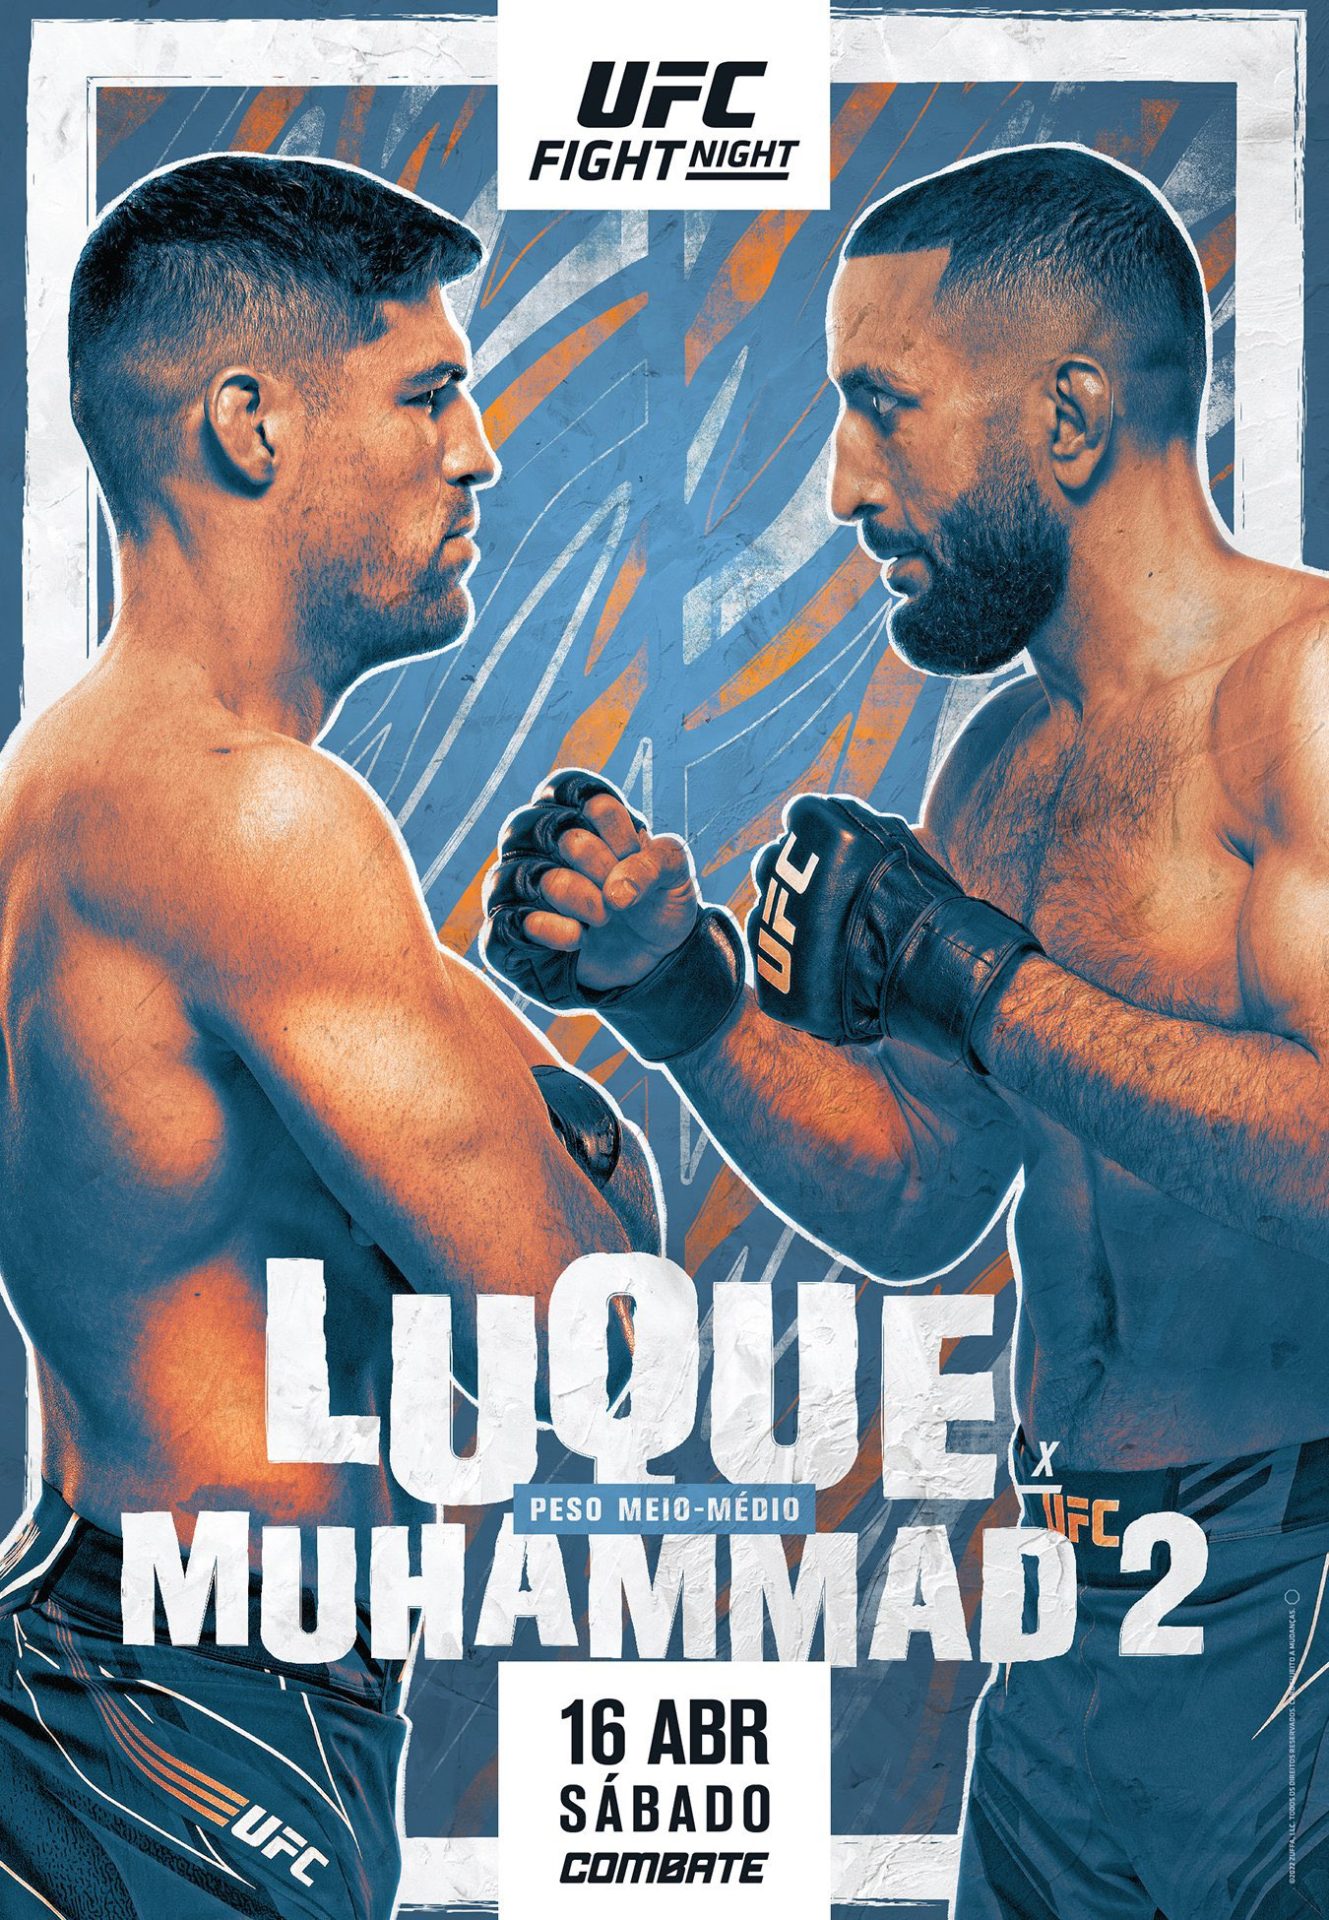 Luque vs Muhammad 2